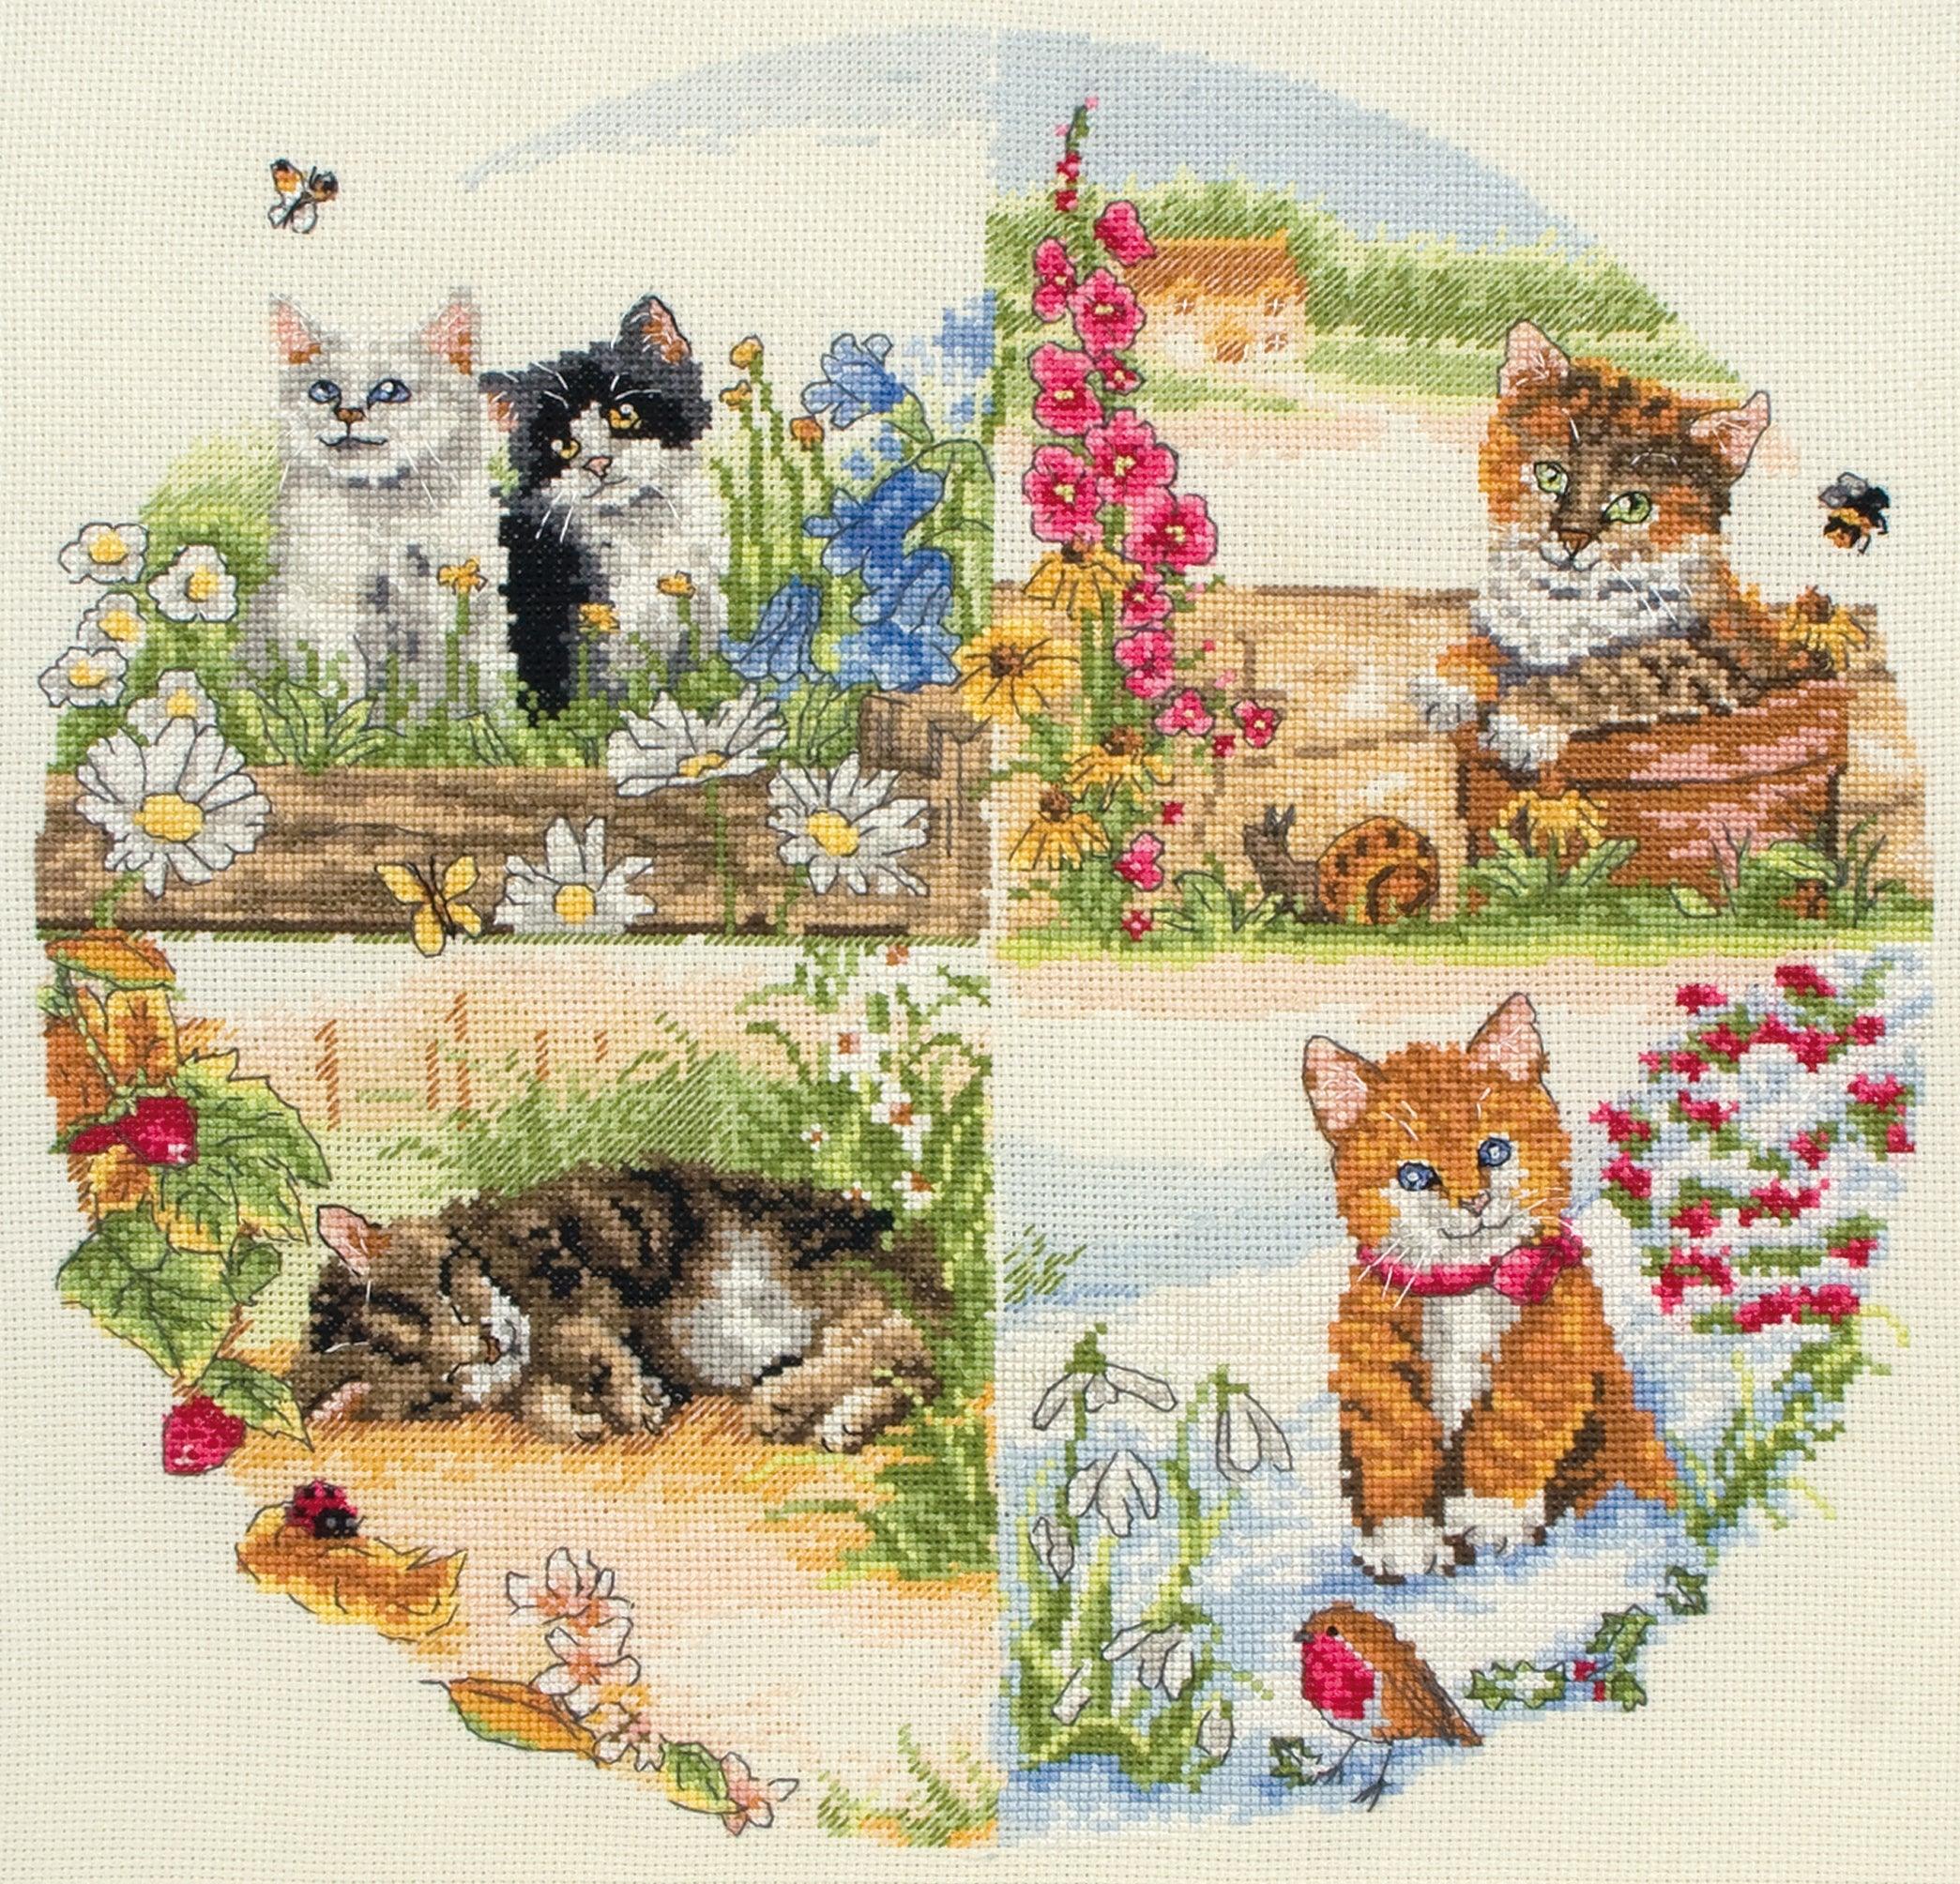 Anchor Cross Stitch Kit - Cats and Seasons, PCE895 - Luca-S Cross Stitch Kits